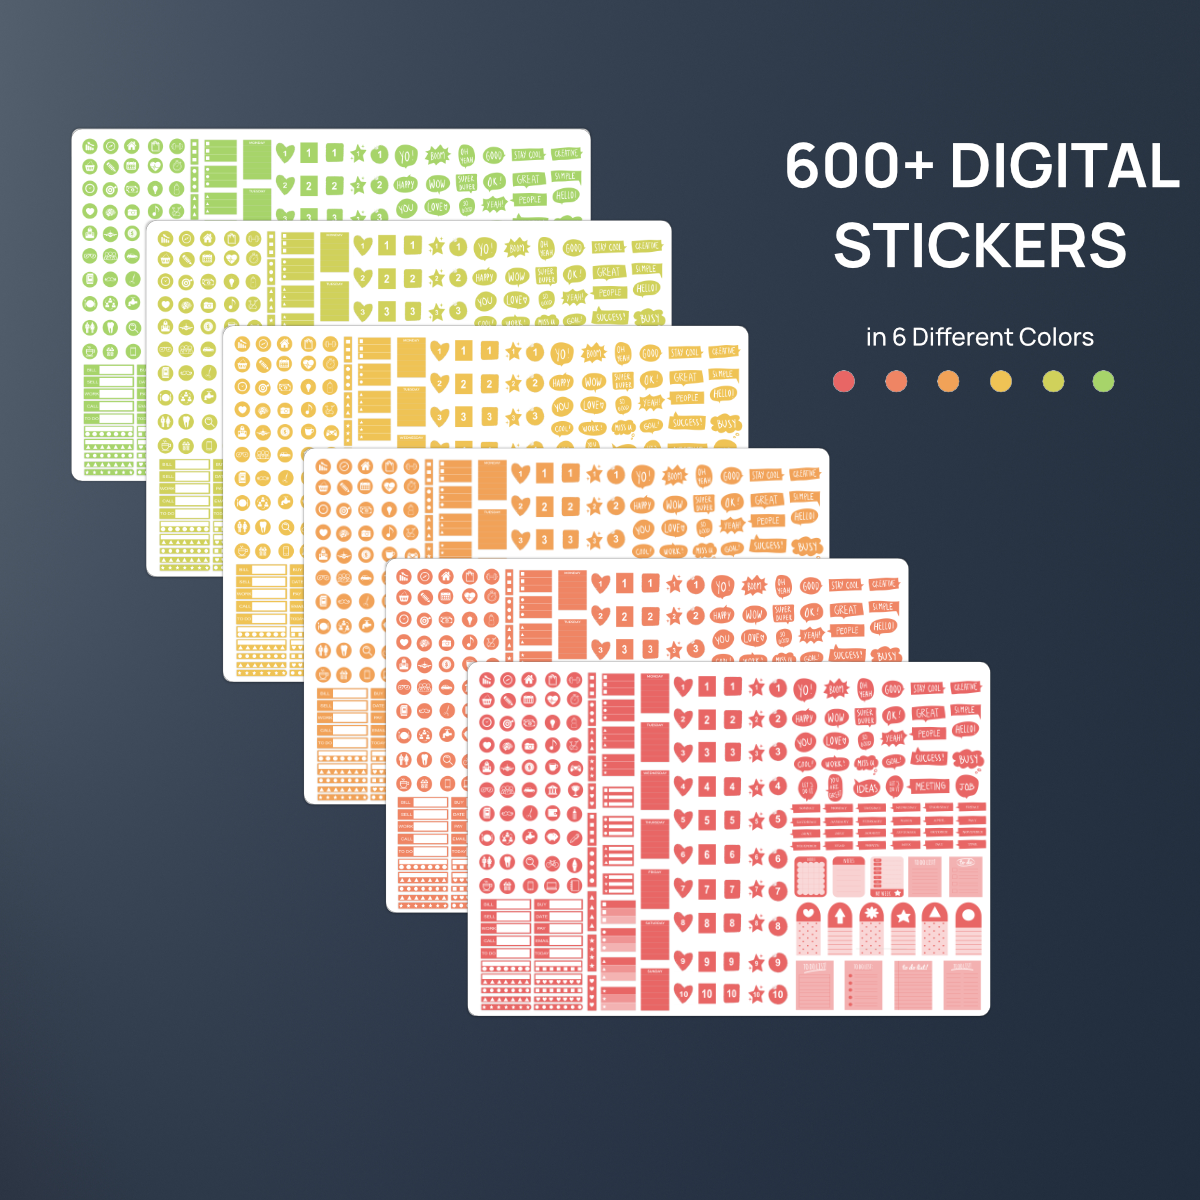 Digital Stickers